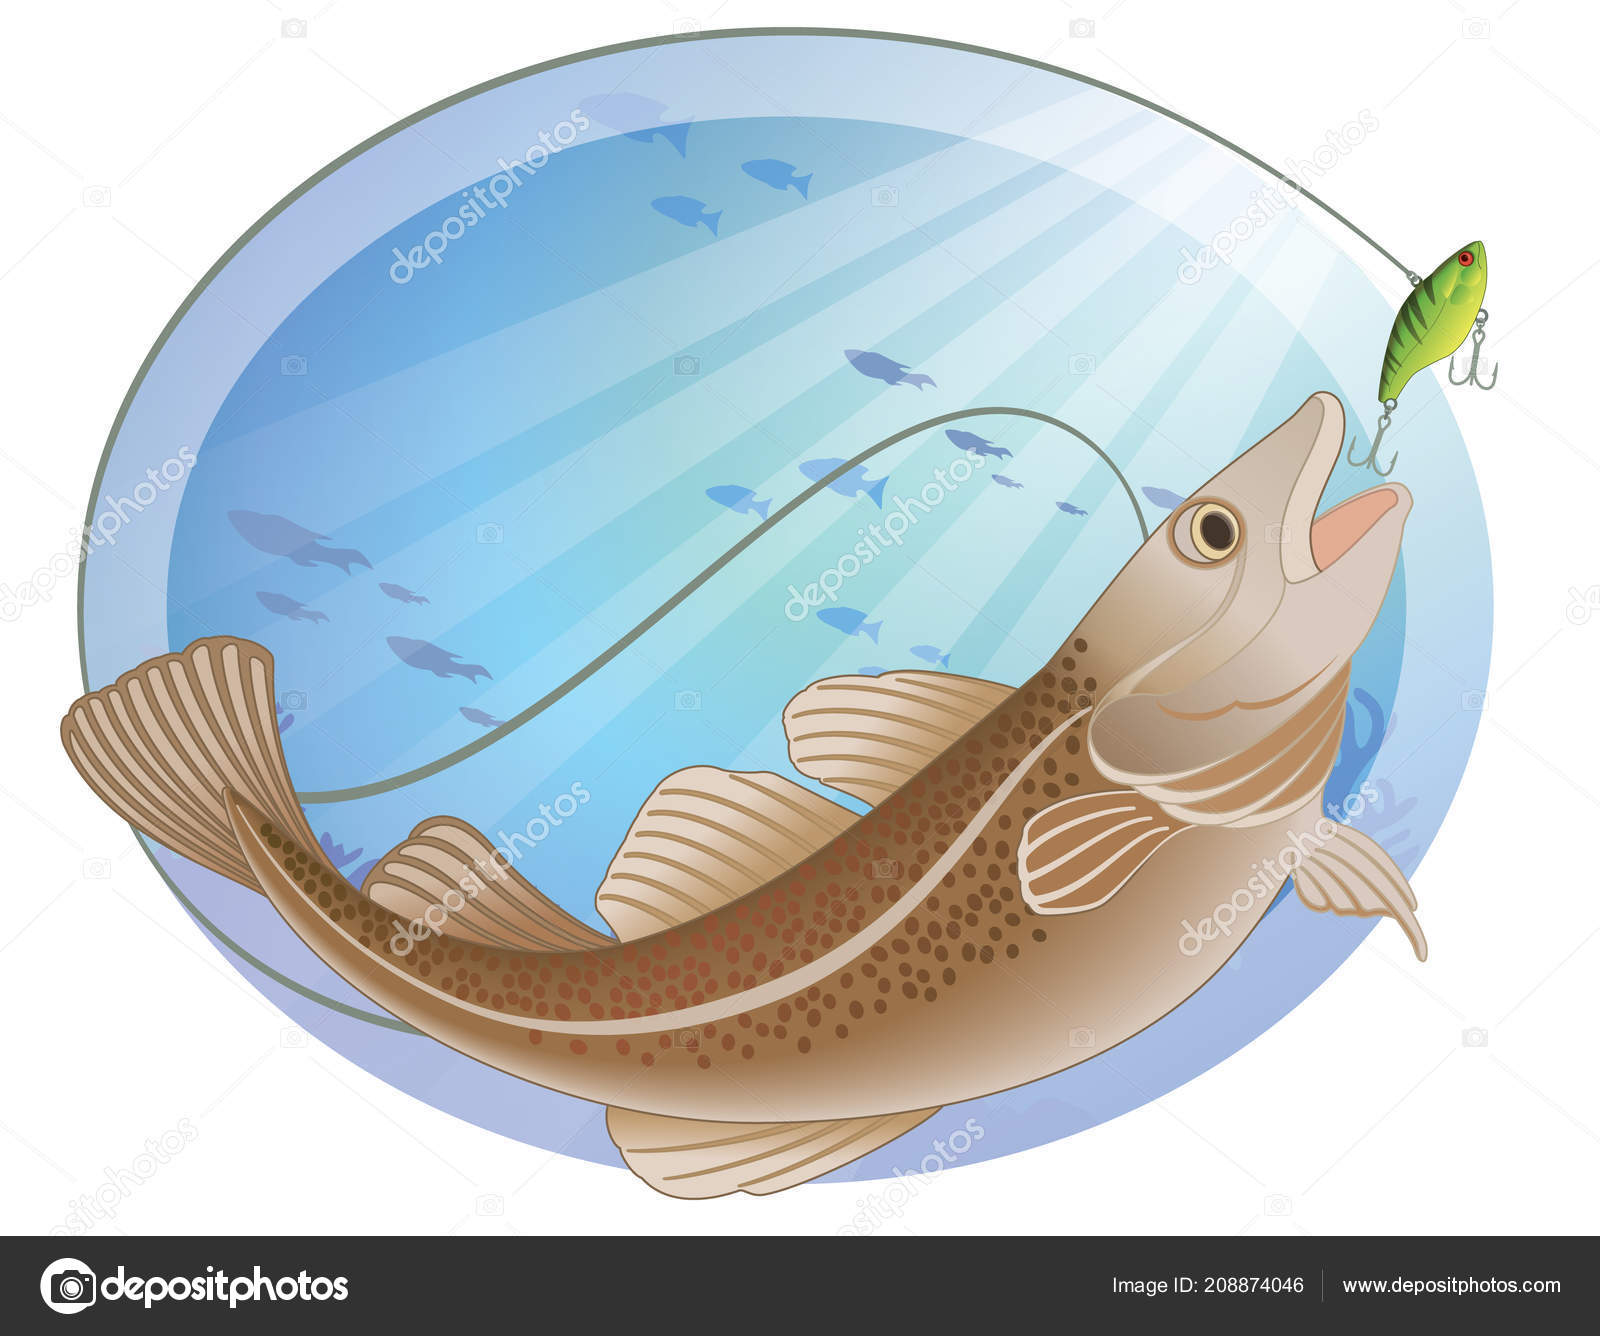 https://st4.depositphotos.com/12465816/20887/v/1600/depositphotos_208874046-stock-illustration-fish-catching-green-lure-fishing.jpg